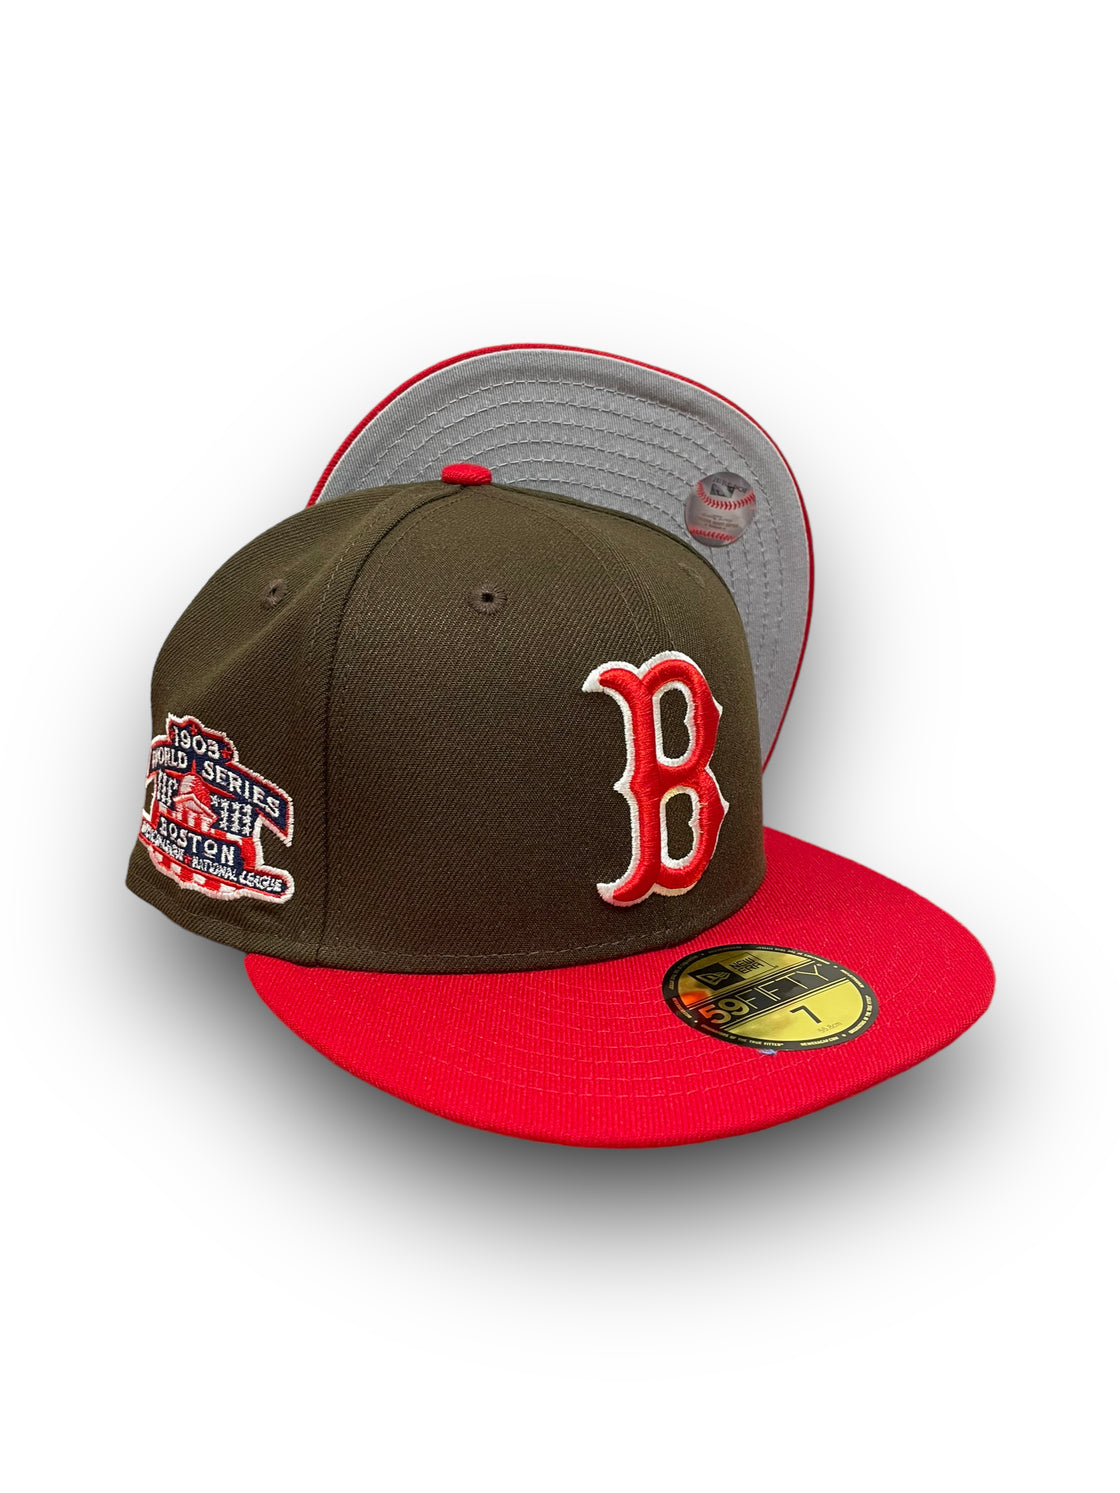 Boston Red Sox 1903 WS